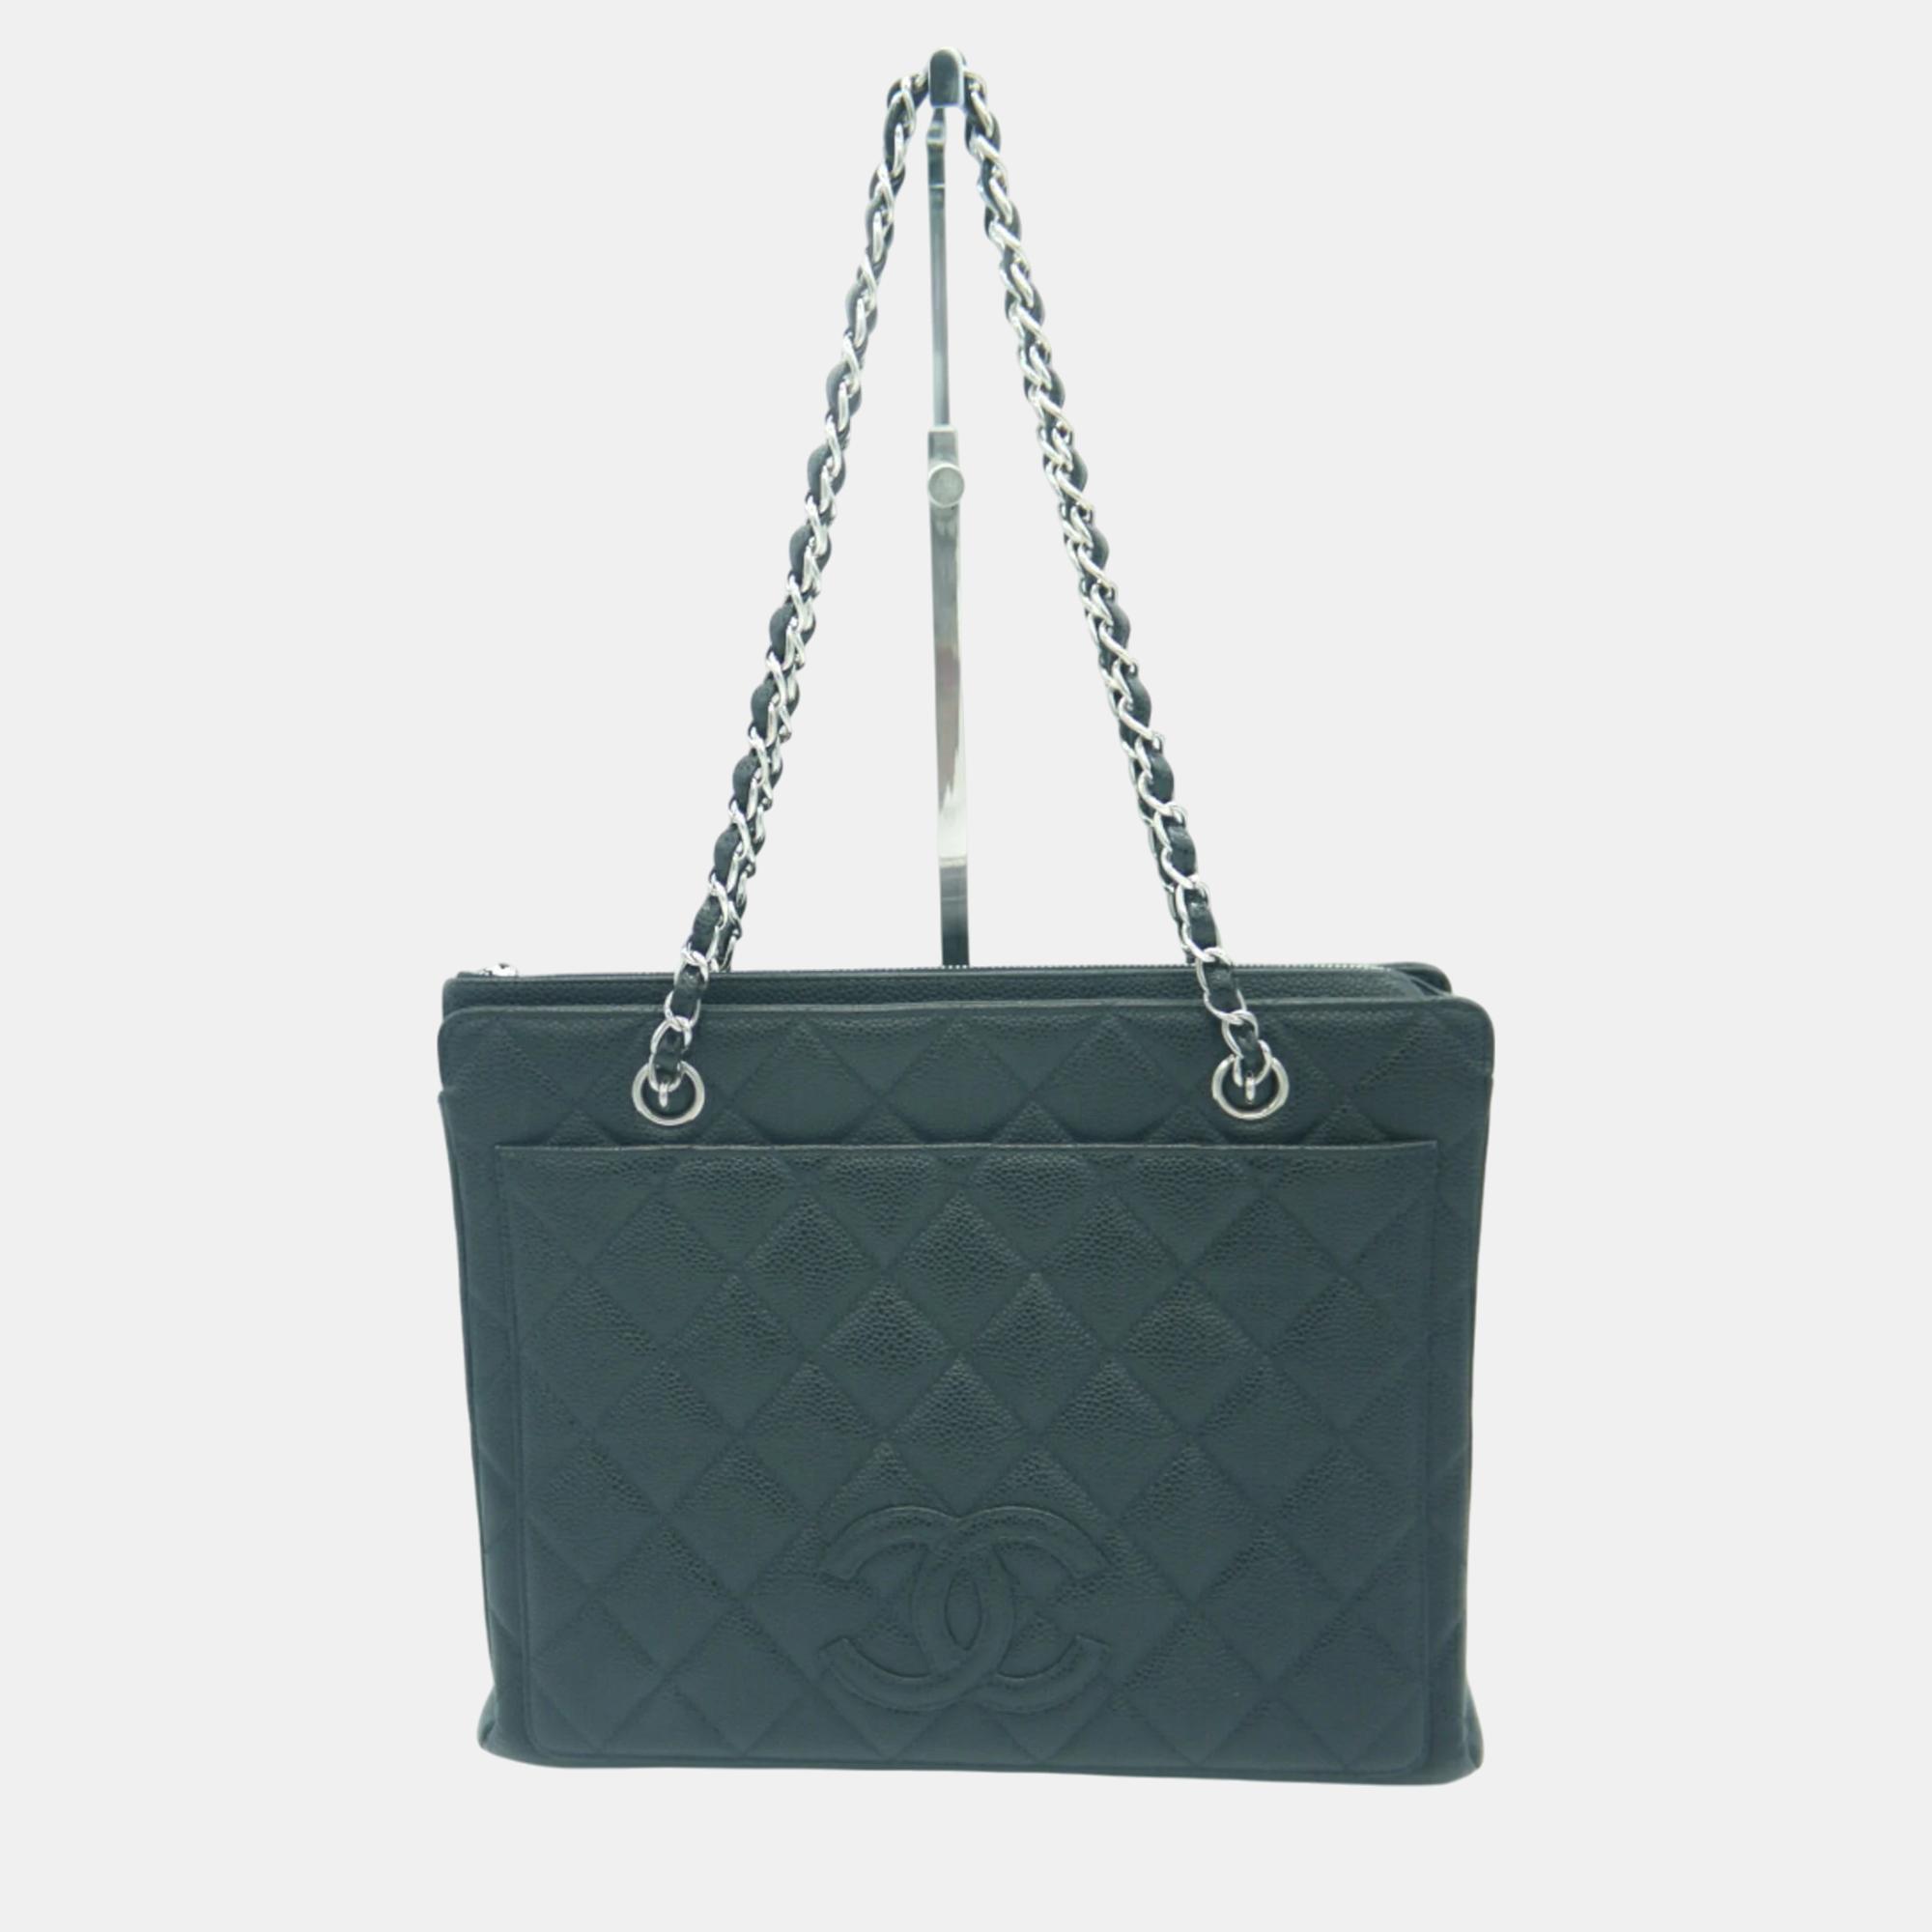 Chanel black leather cc v tote bag